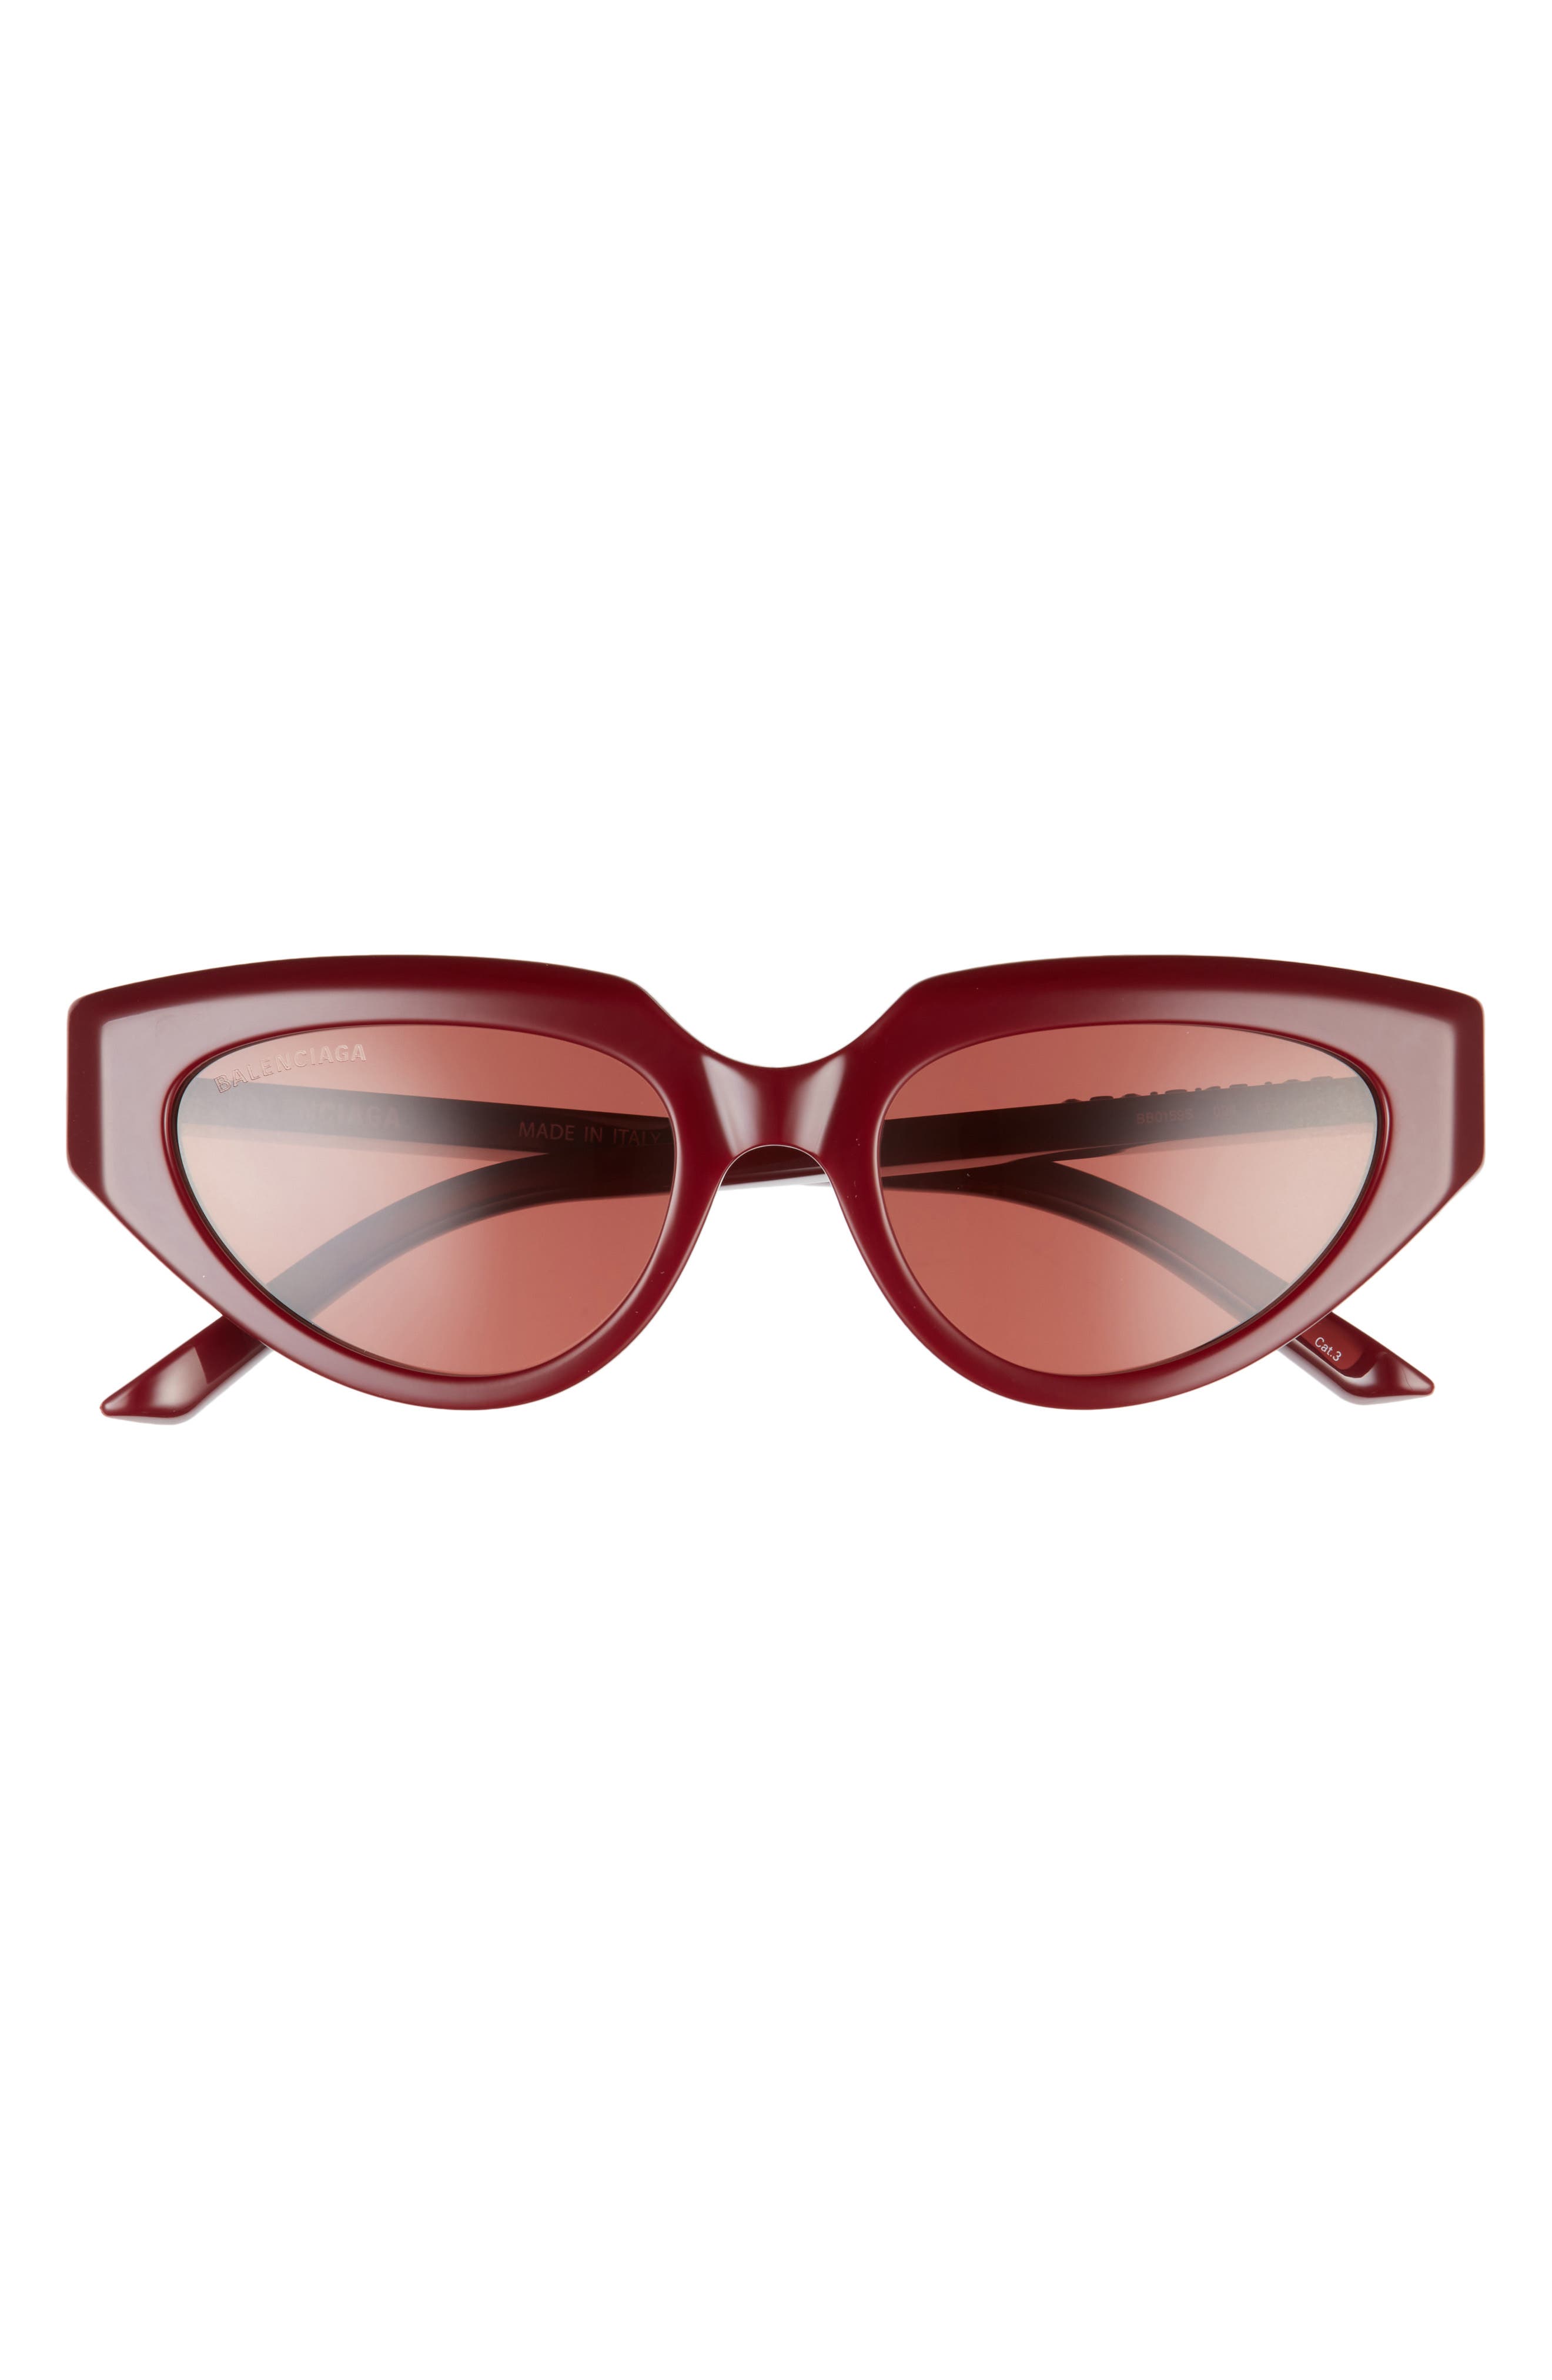 Balenciaga 52mm Cat Eye Sunglasses in Burgundy at Nordstrom